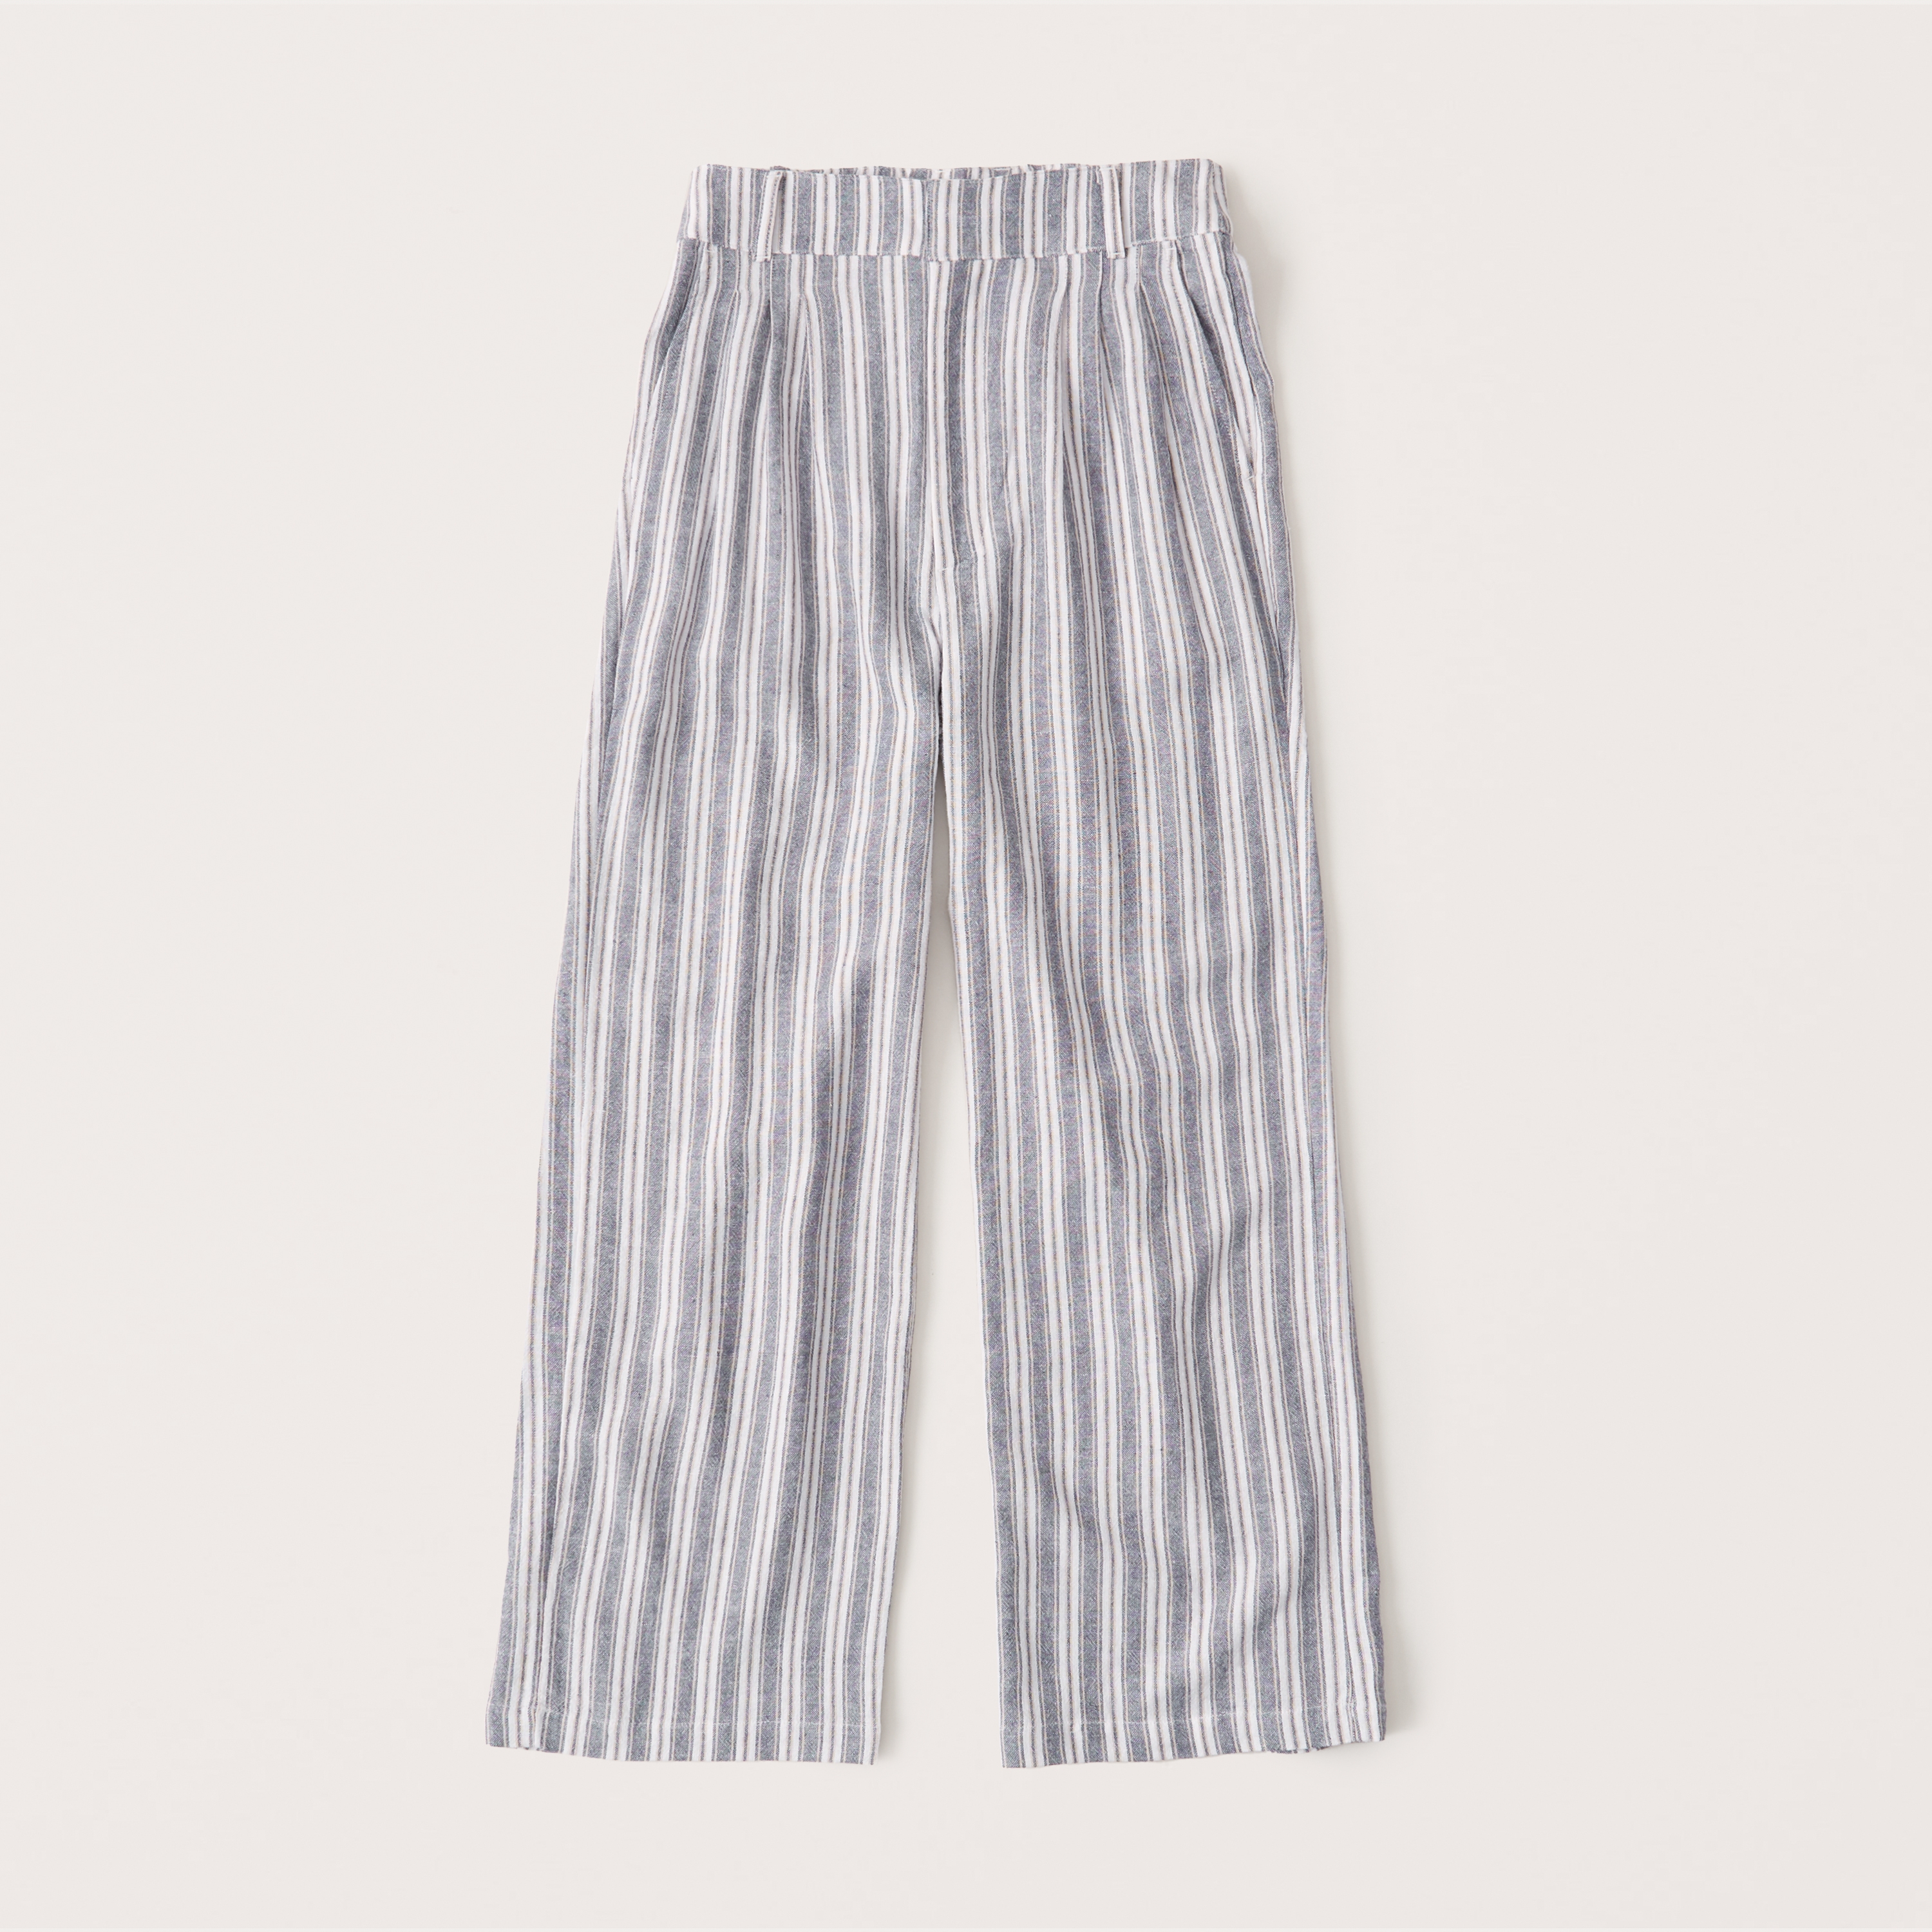 abercrombie striped pants